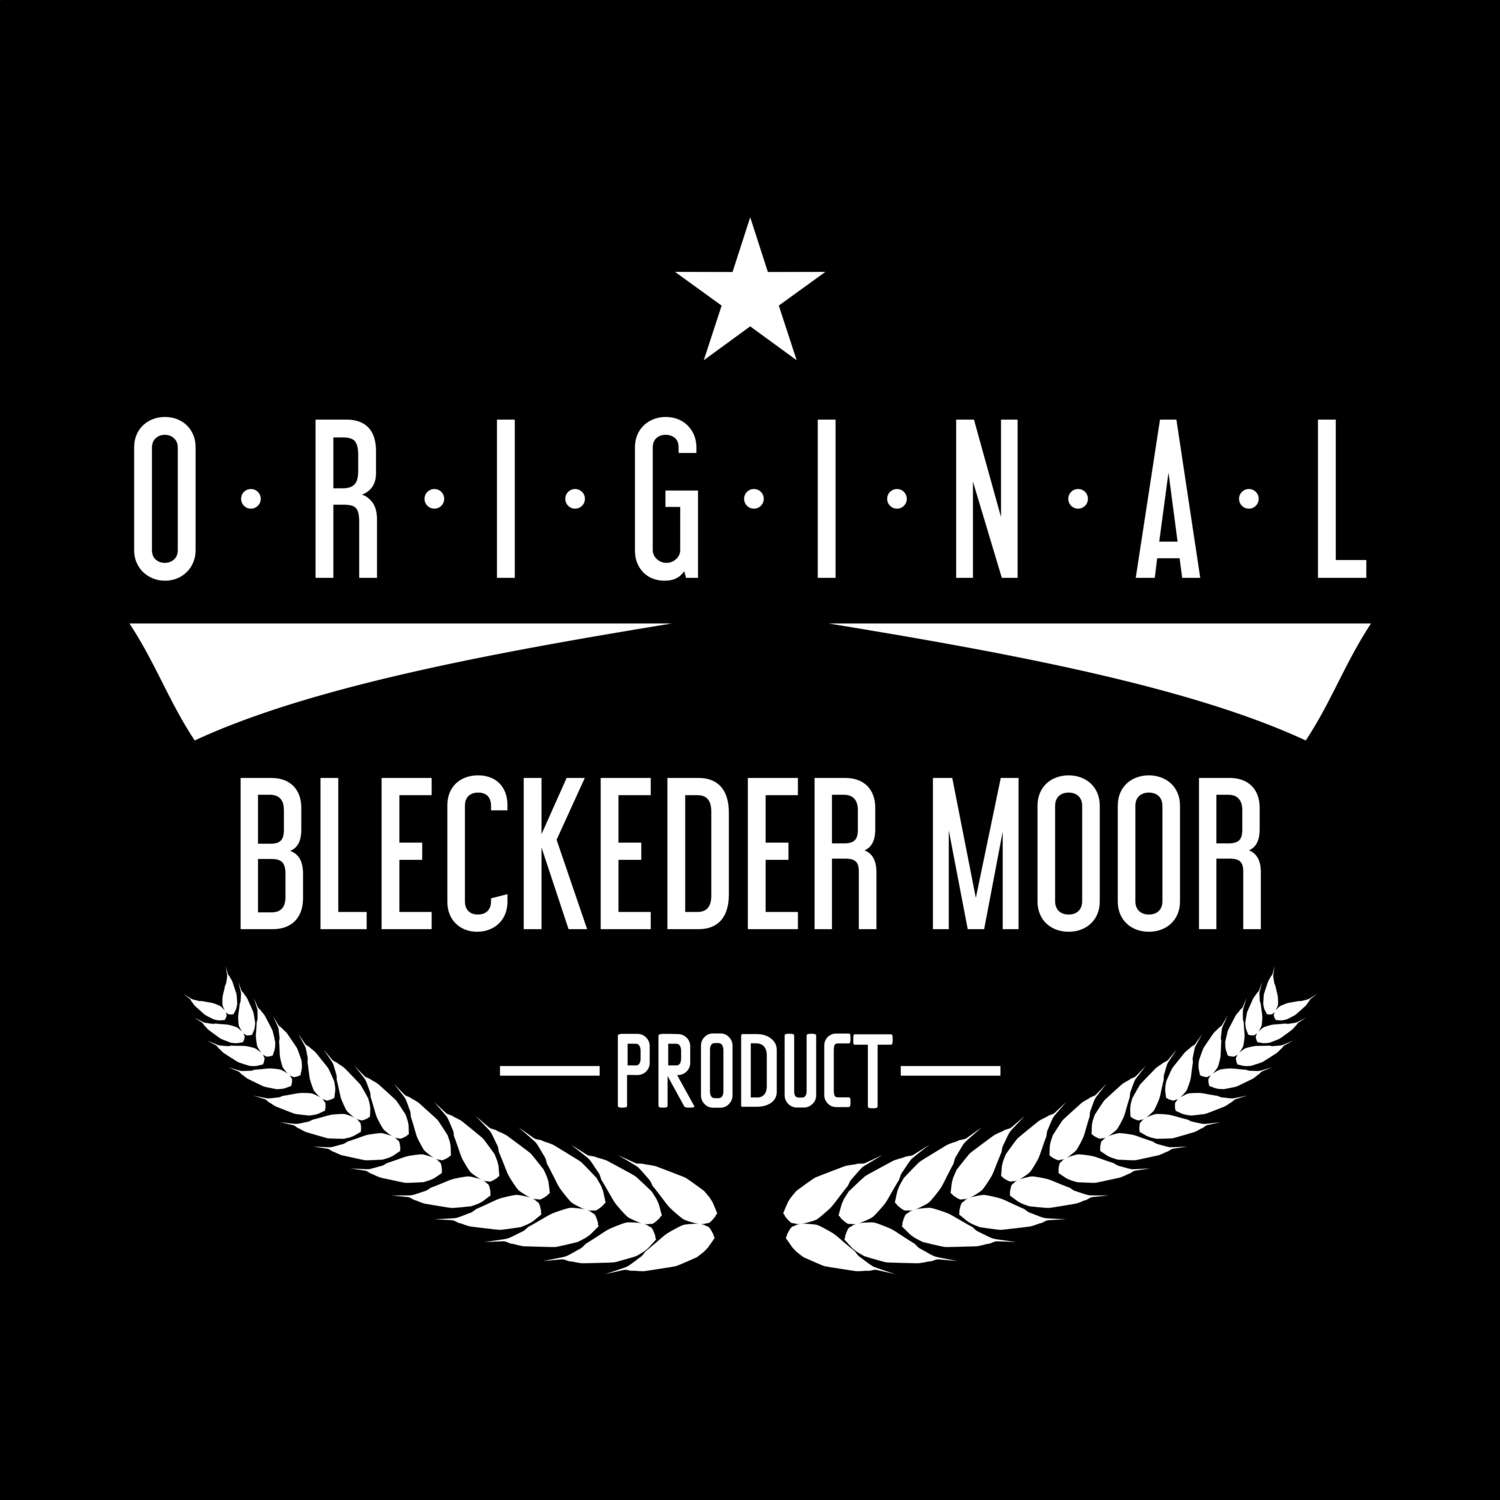 Bleckeder Moor T-Shirt »Original Product«